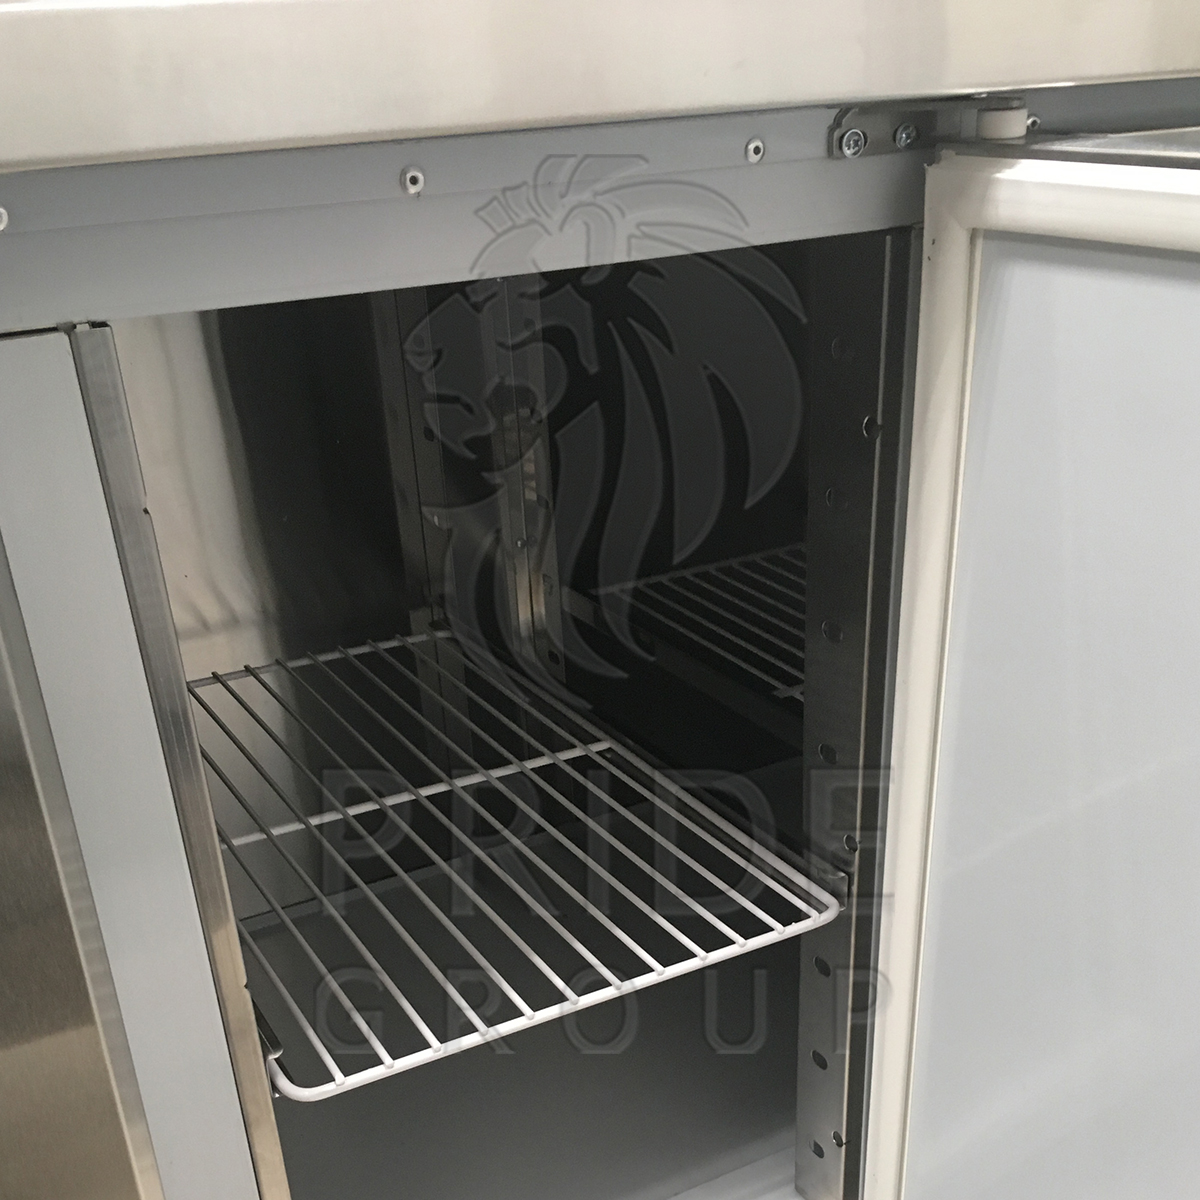 Стол холодильный для салатов Finist СХСнс-700-3 нижний агрегат 1485х700x850 мм